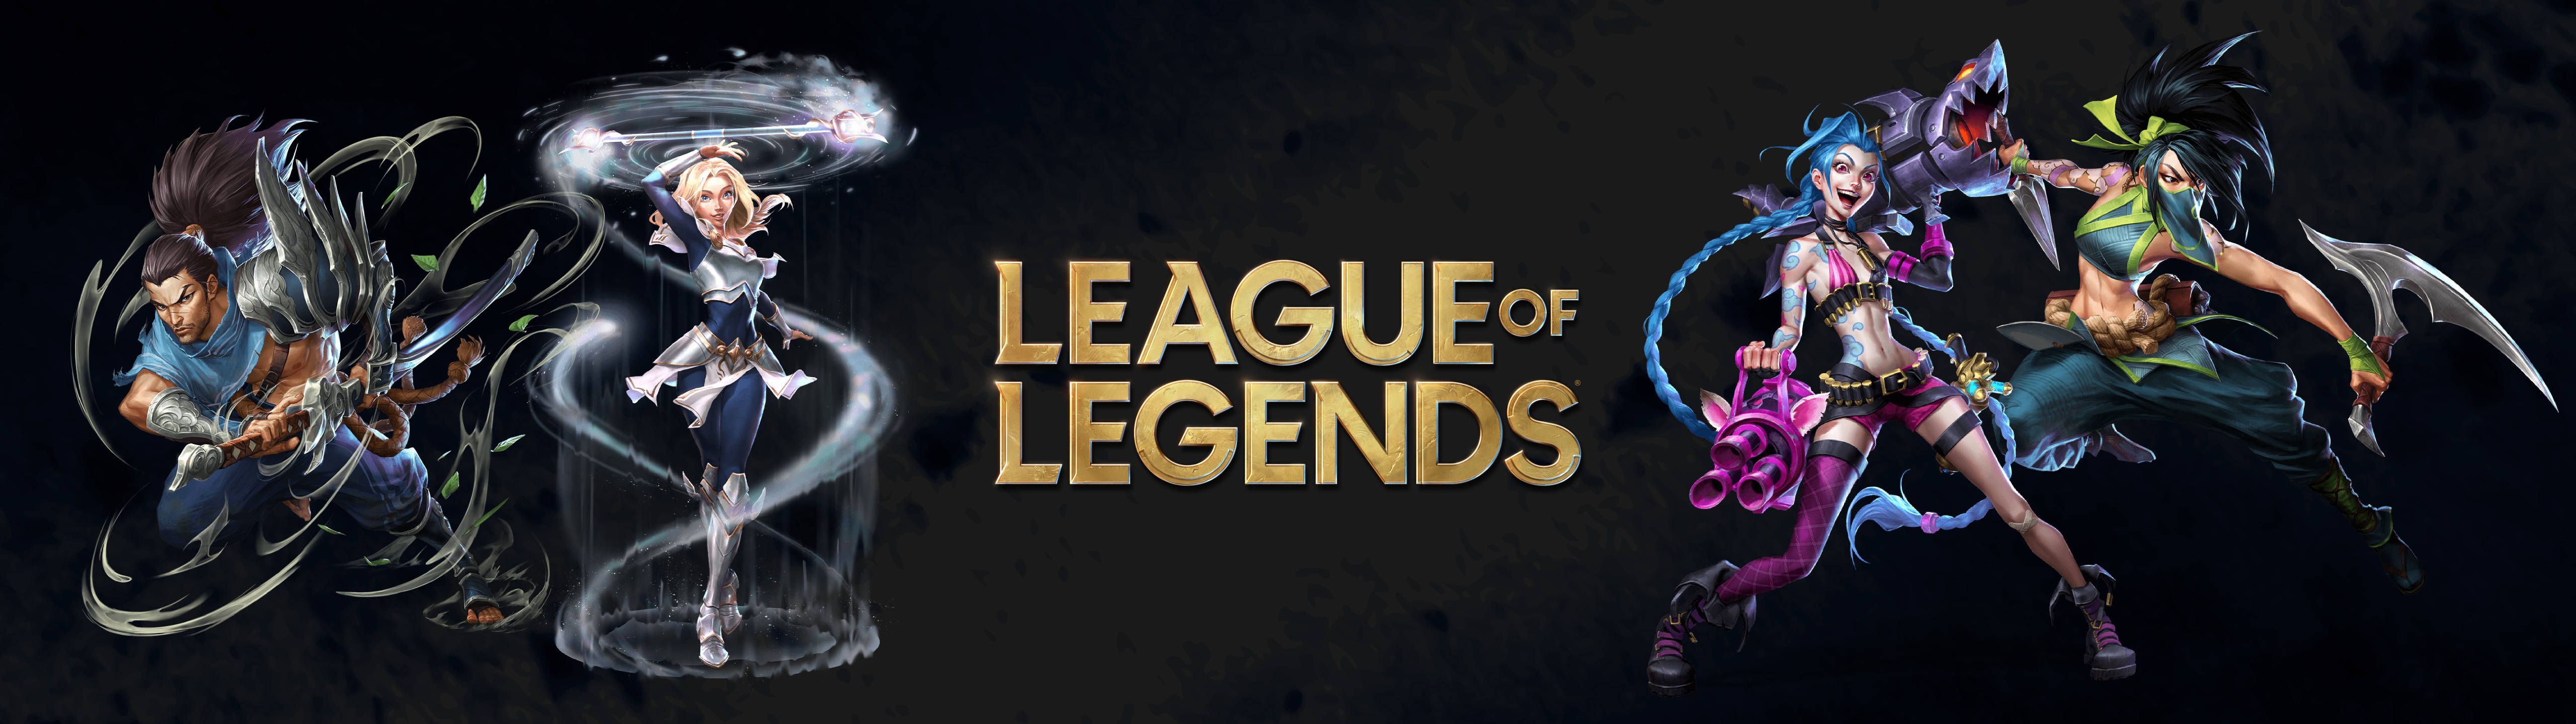 Download League Of Legends 5120x1440 Gaming Wallpaper